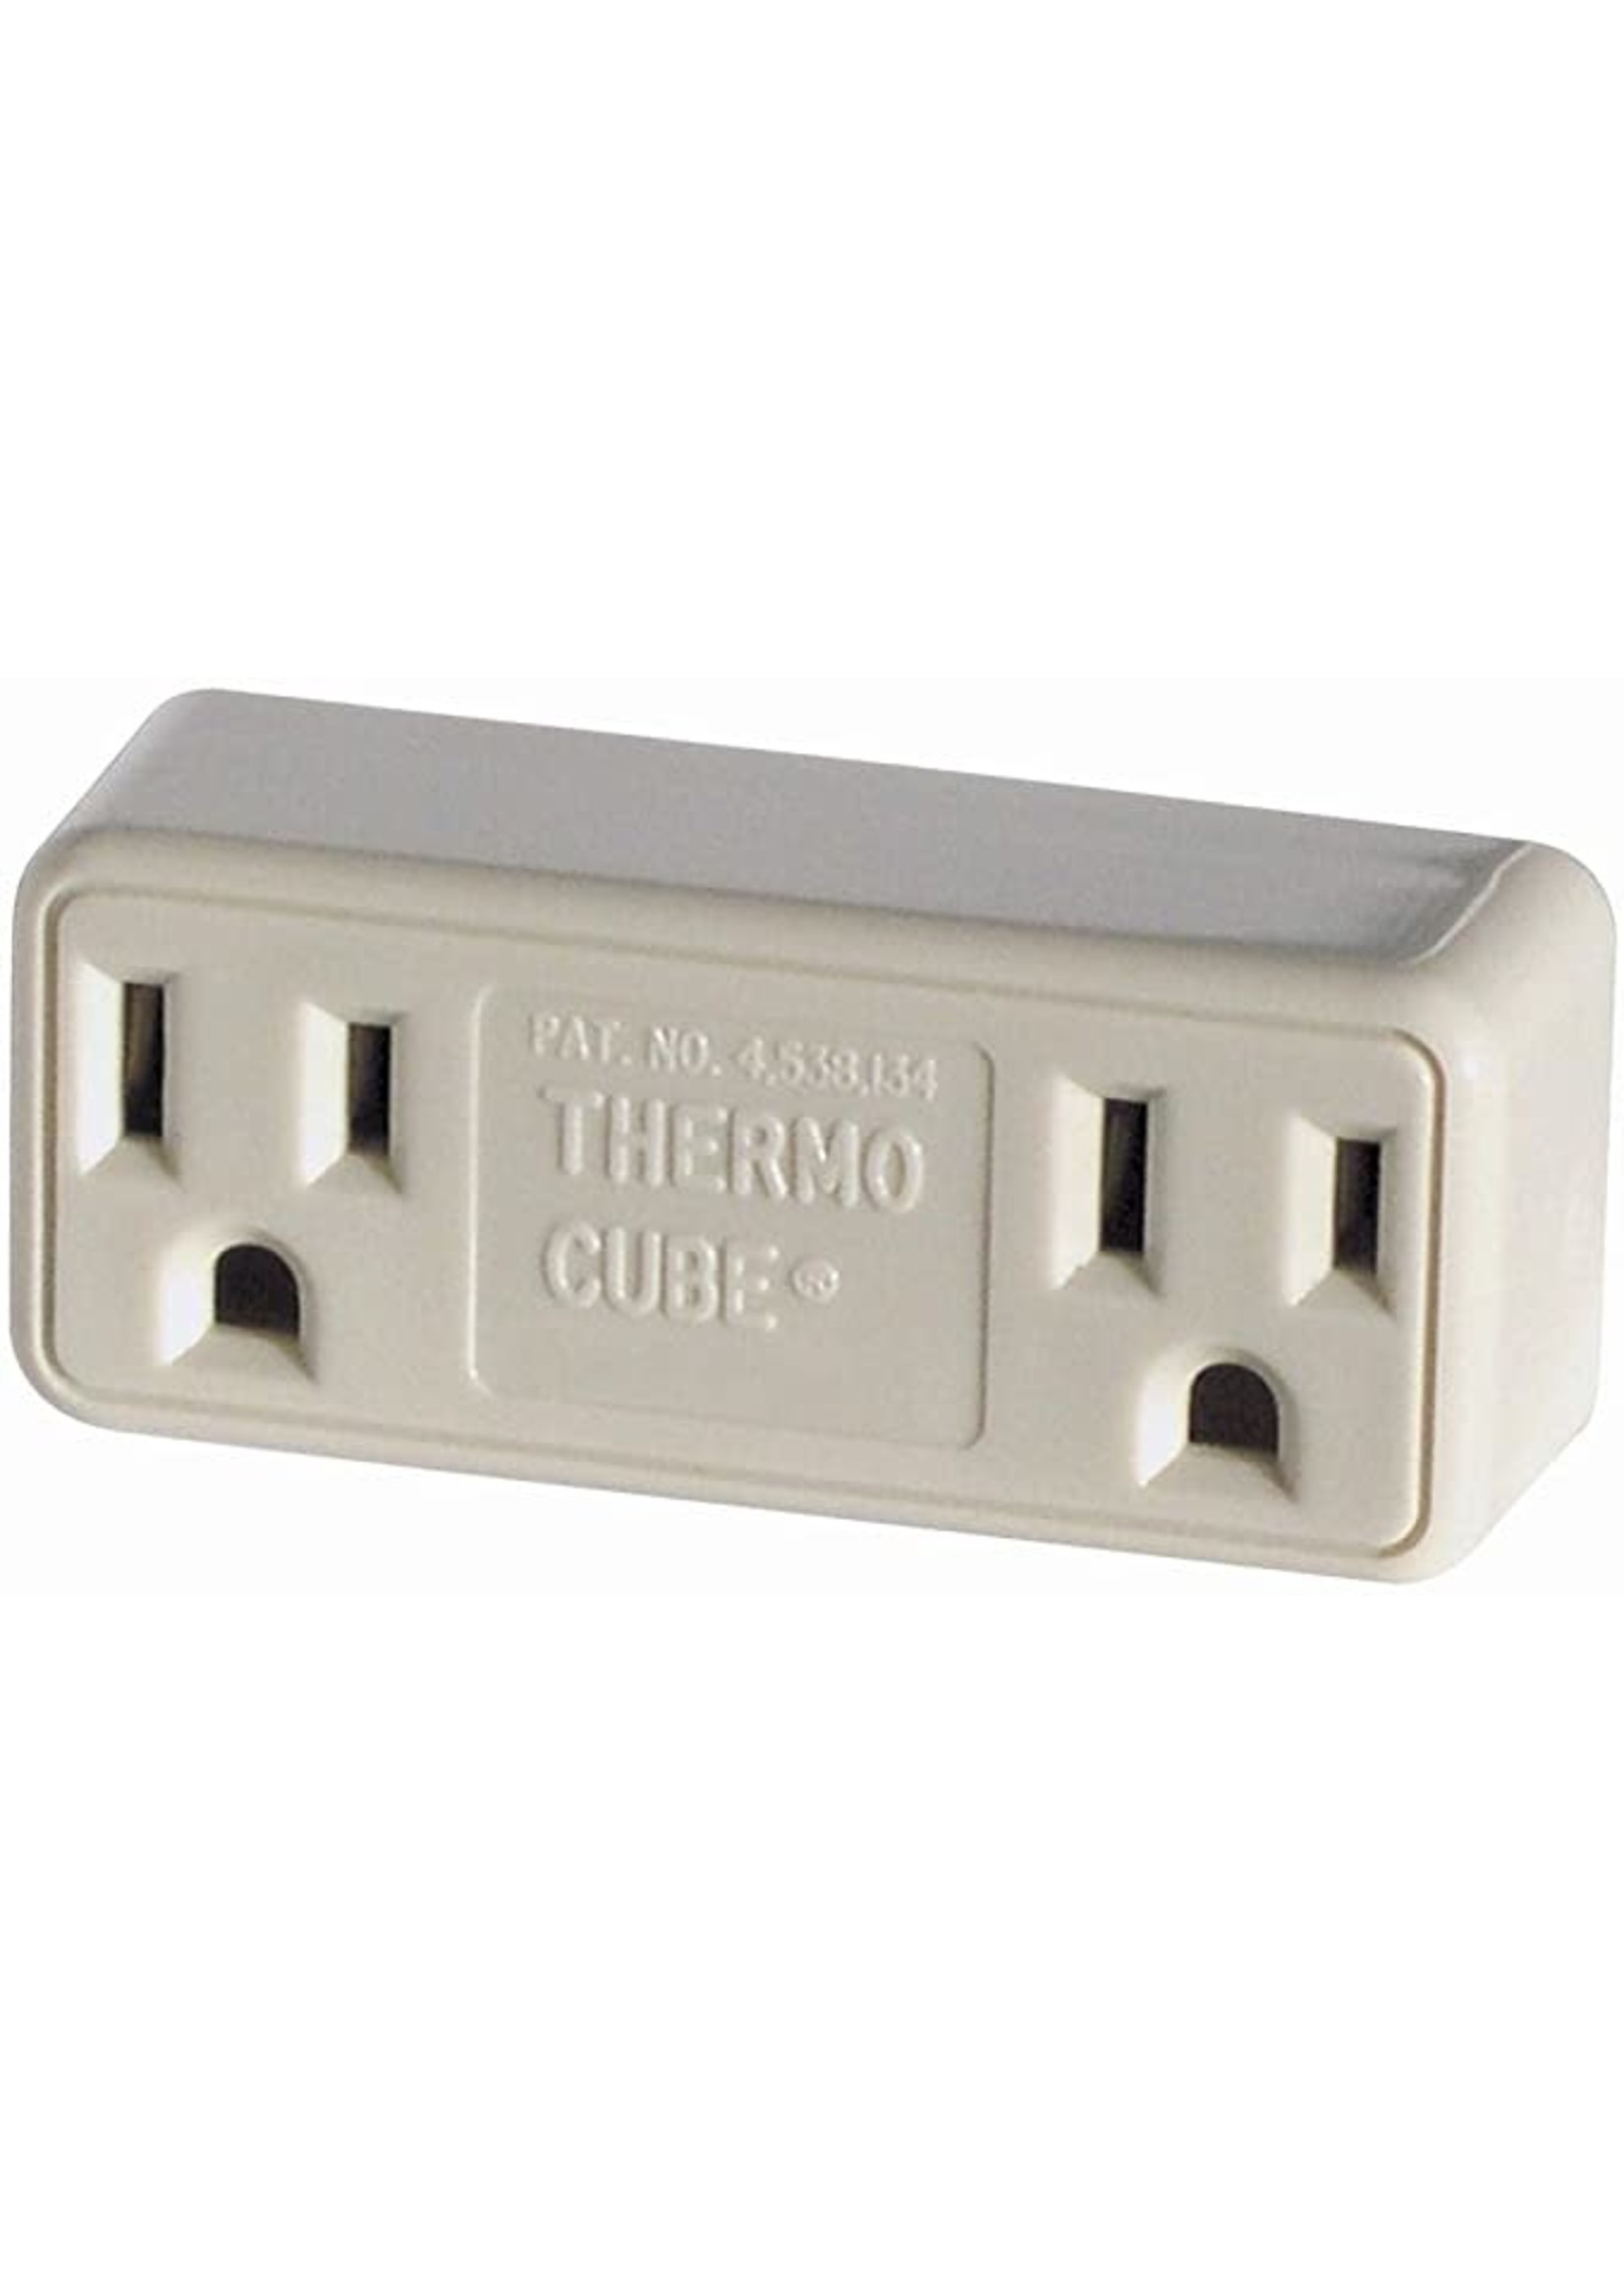 Thermo Cube TC3